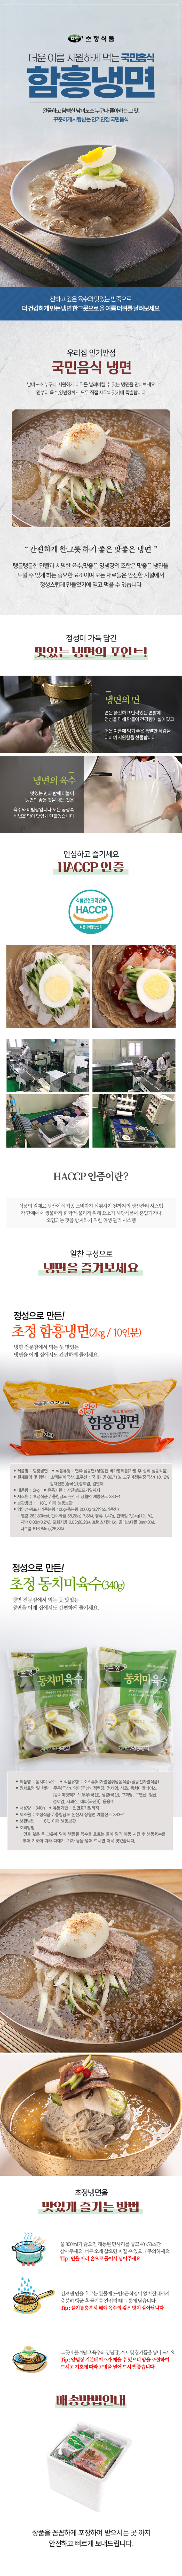 22_chojung_dong_hanmhg_page.jpg